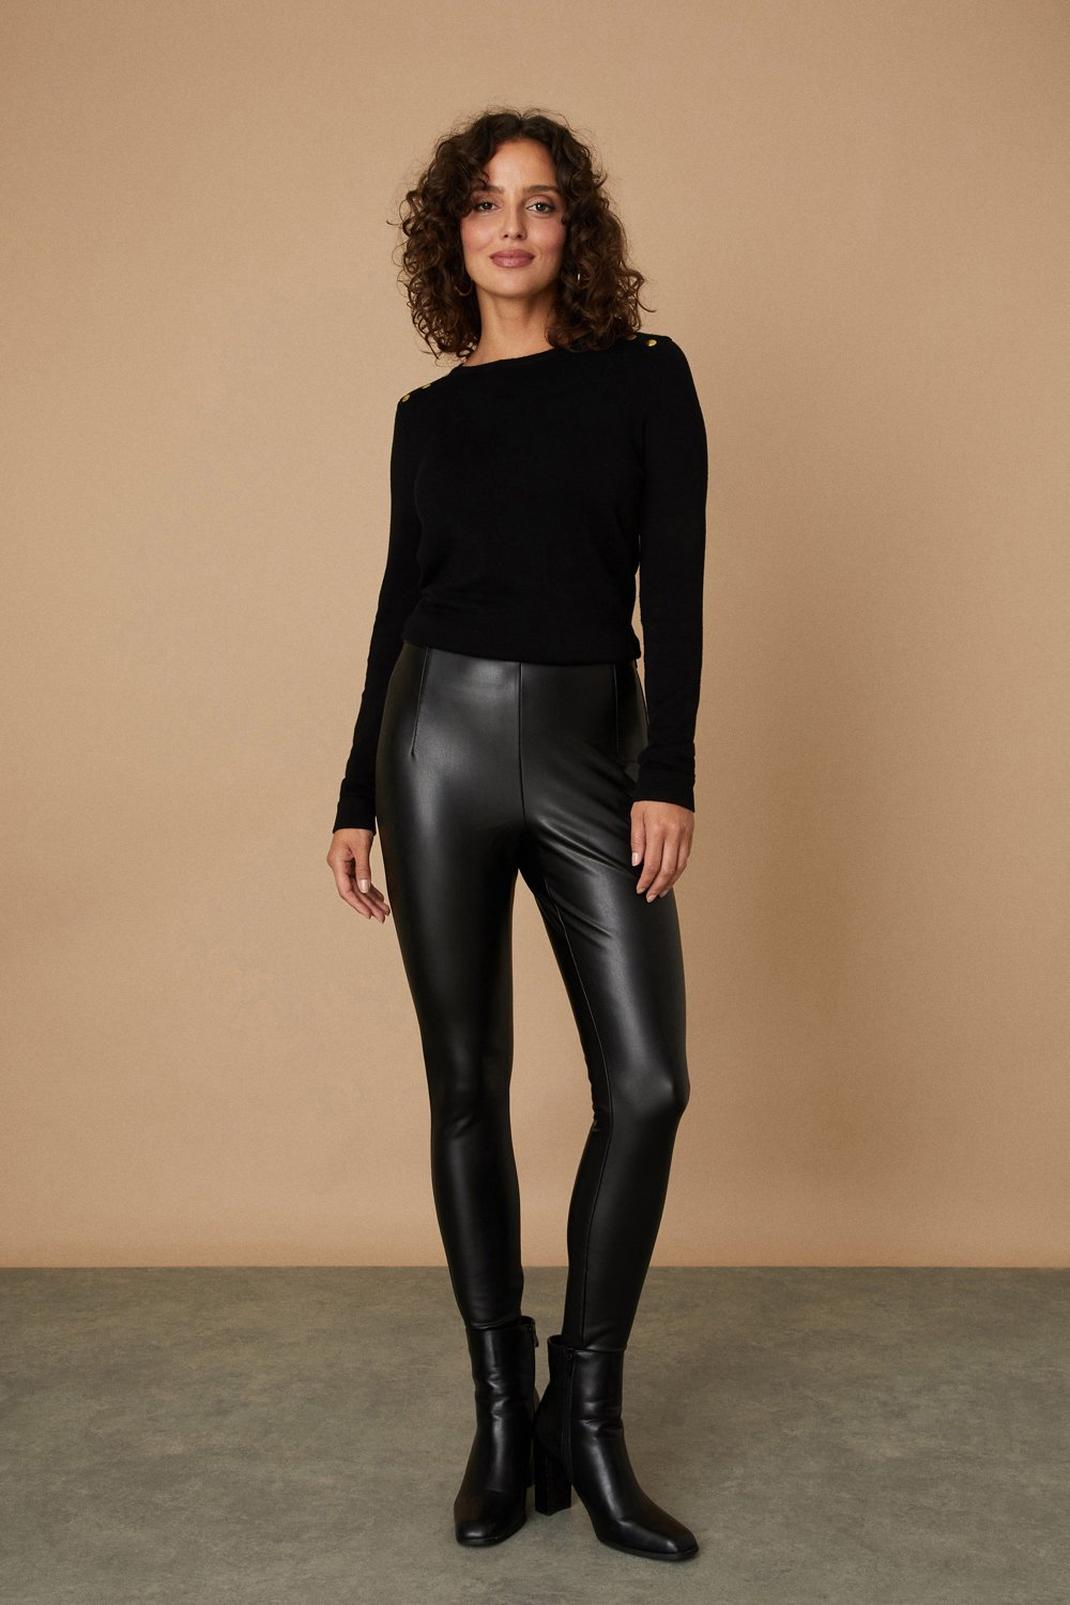 Leather Leggings Dark Brown – Sanne Alexandra, 53% OFF